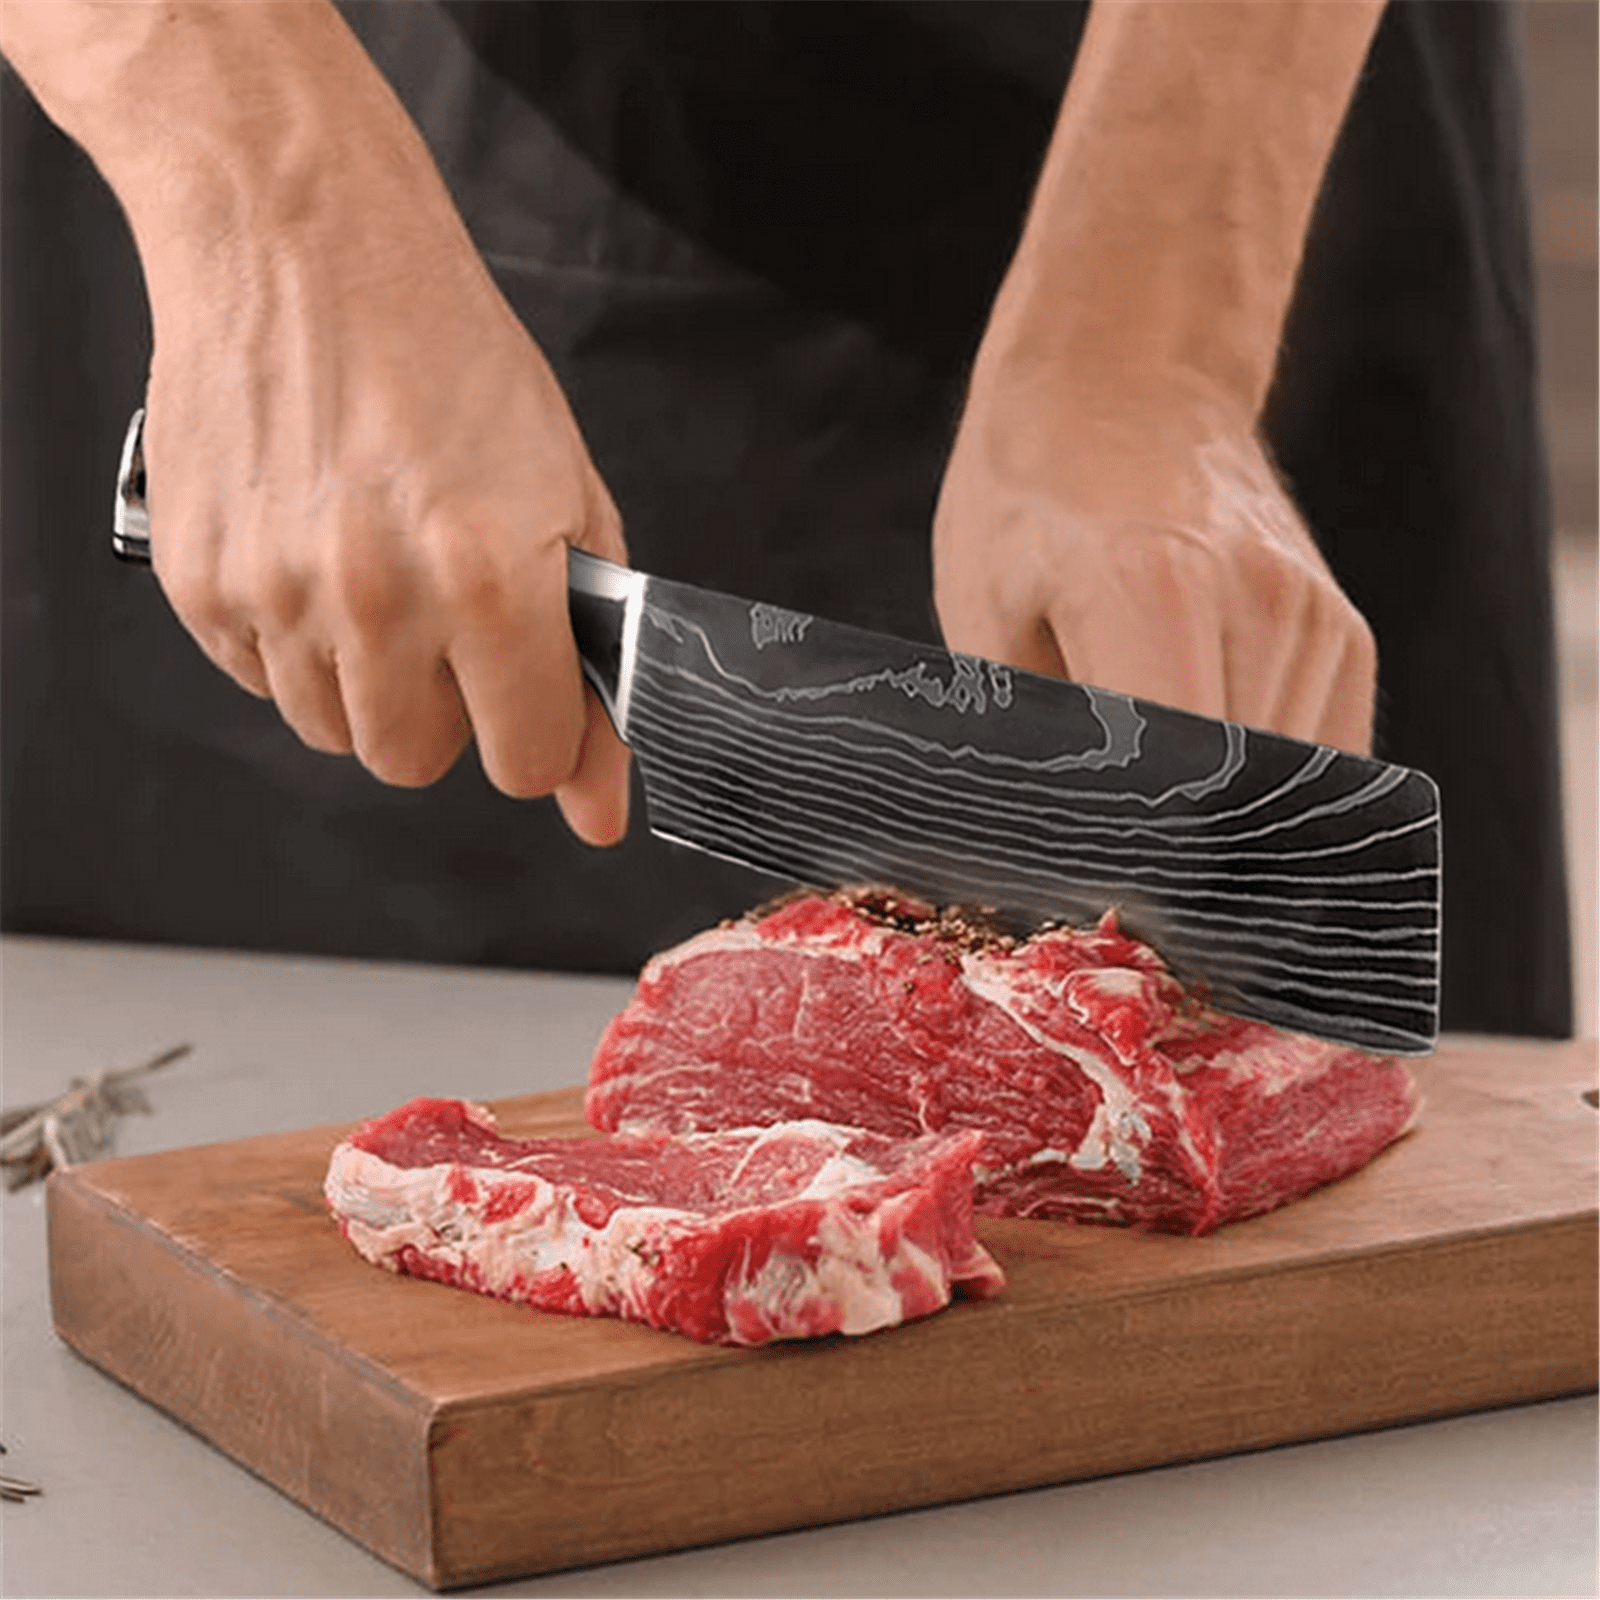 Cutluxe Santoku Knife – 5 Multipurpose Kitchen Knife for Cutting Slicing &  Chopping – Forged High Carbon German Steel – Full Tang & Razor Sharp –  Ergonomic Handle Design – Artisan Series - Yahoo Shopping